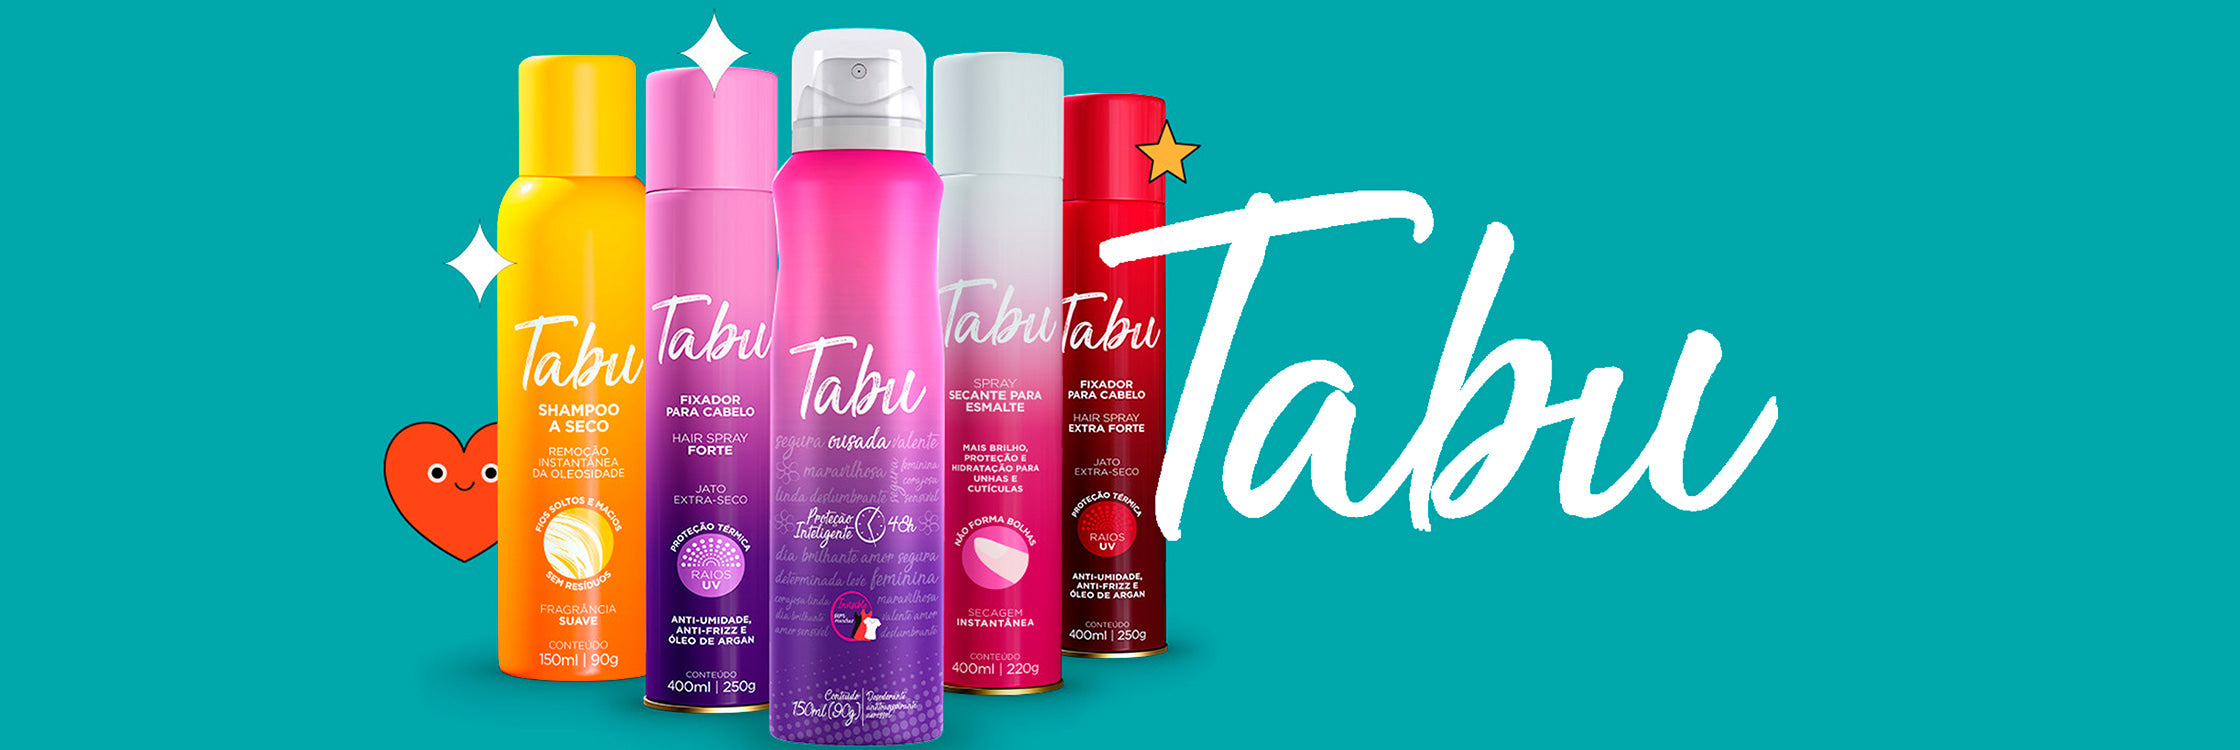 Tabu Perfume Collection at The Perfume World